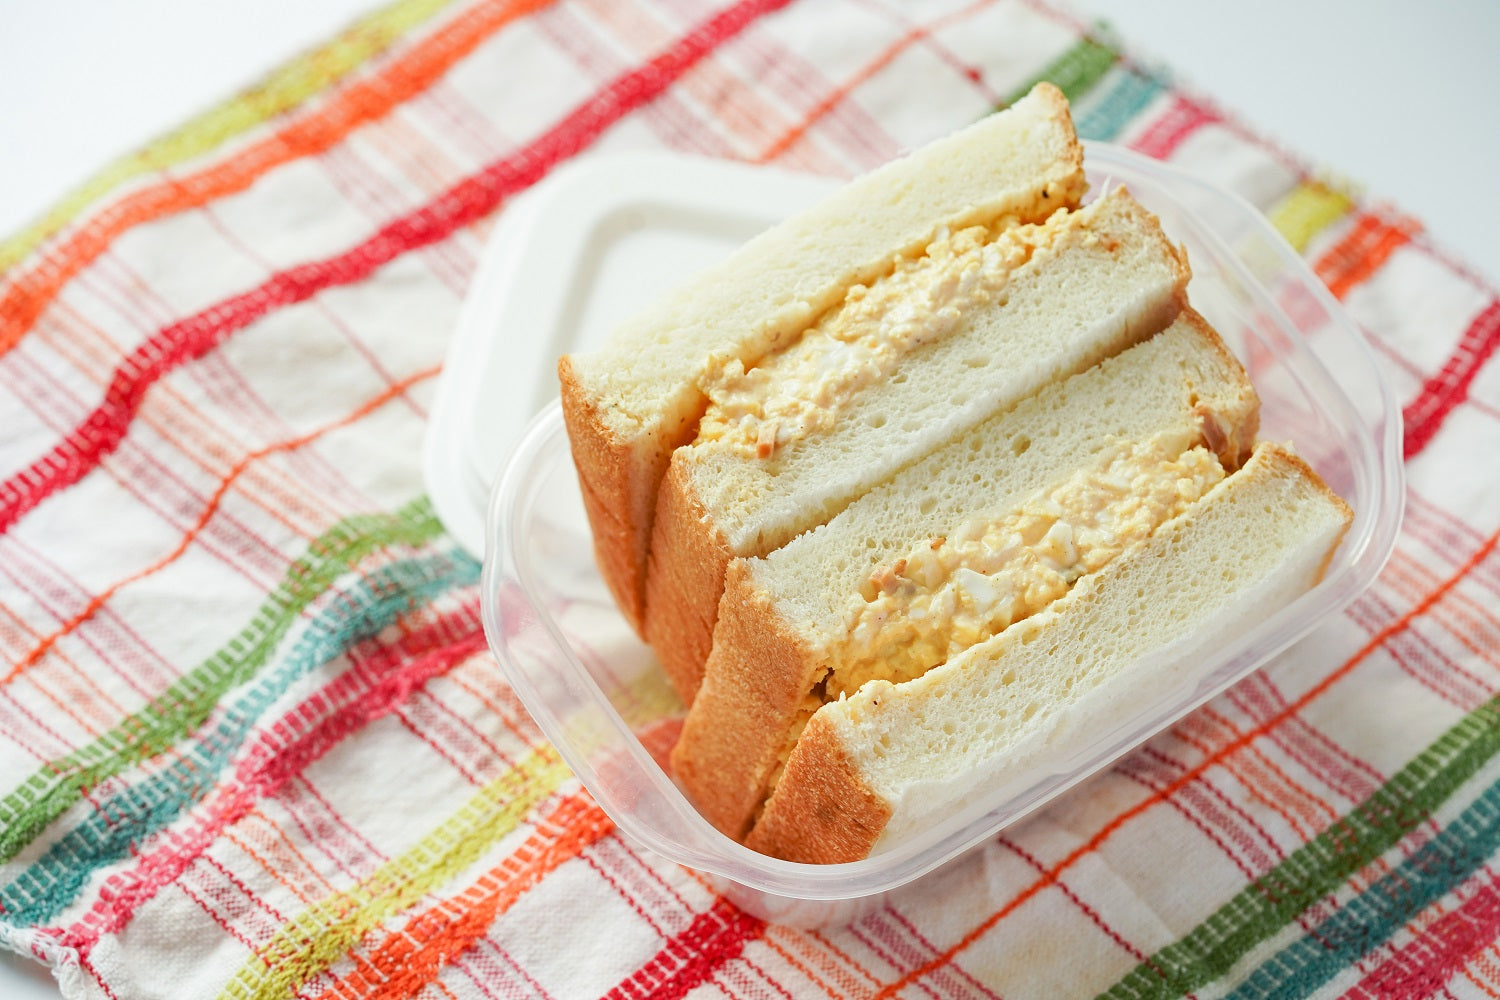 RECIPE: Quick and Easy Miso Egg Sandwich